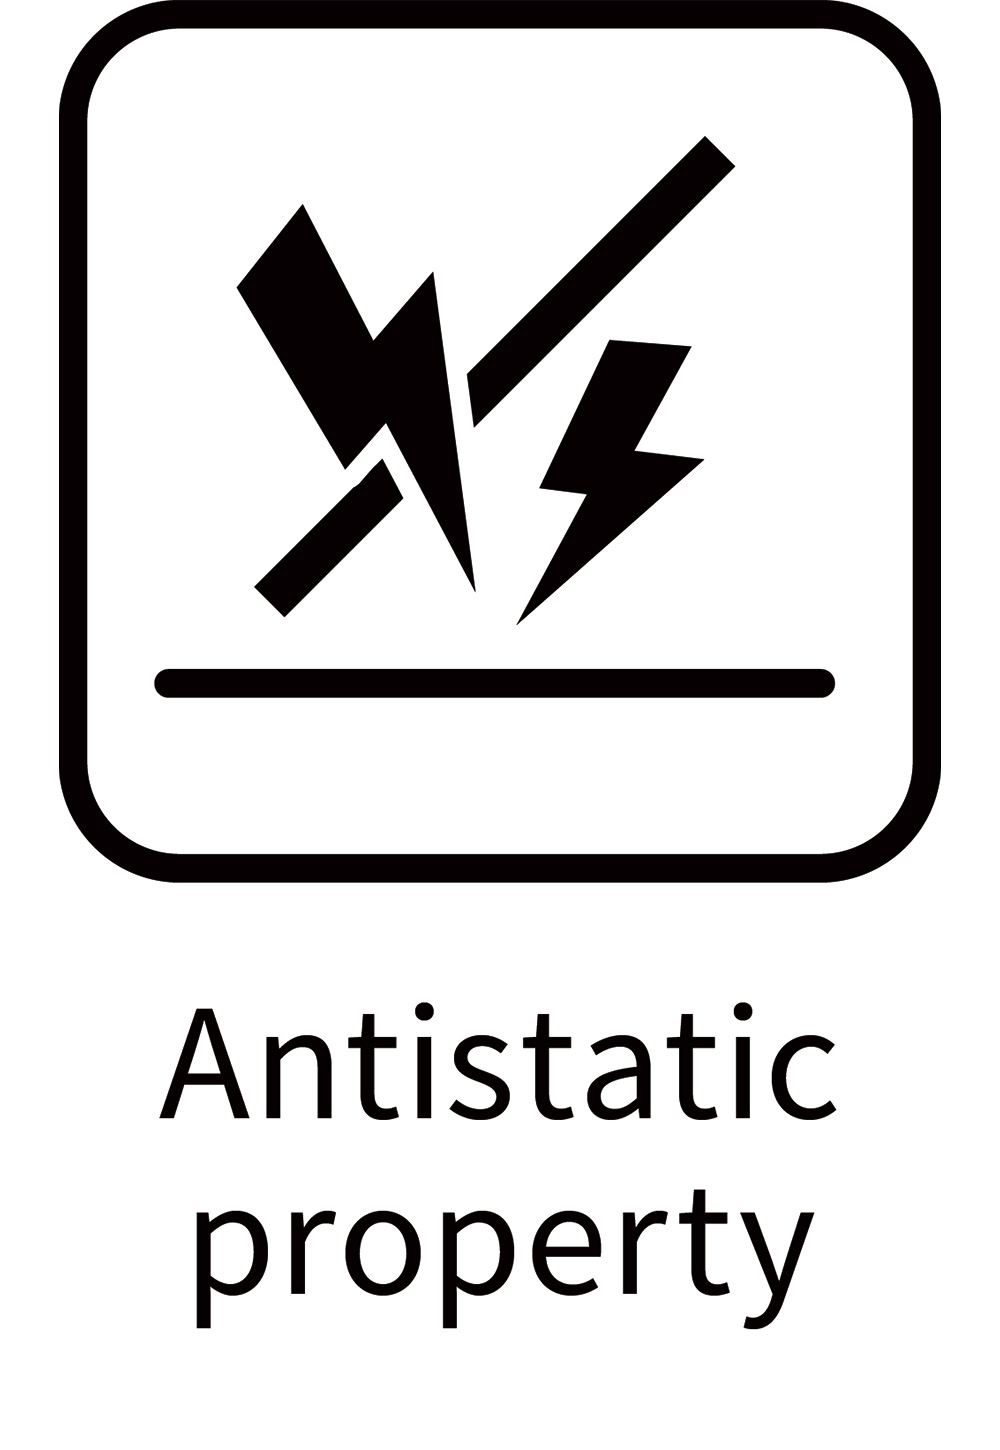 Antistatic property